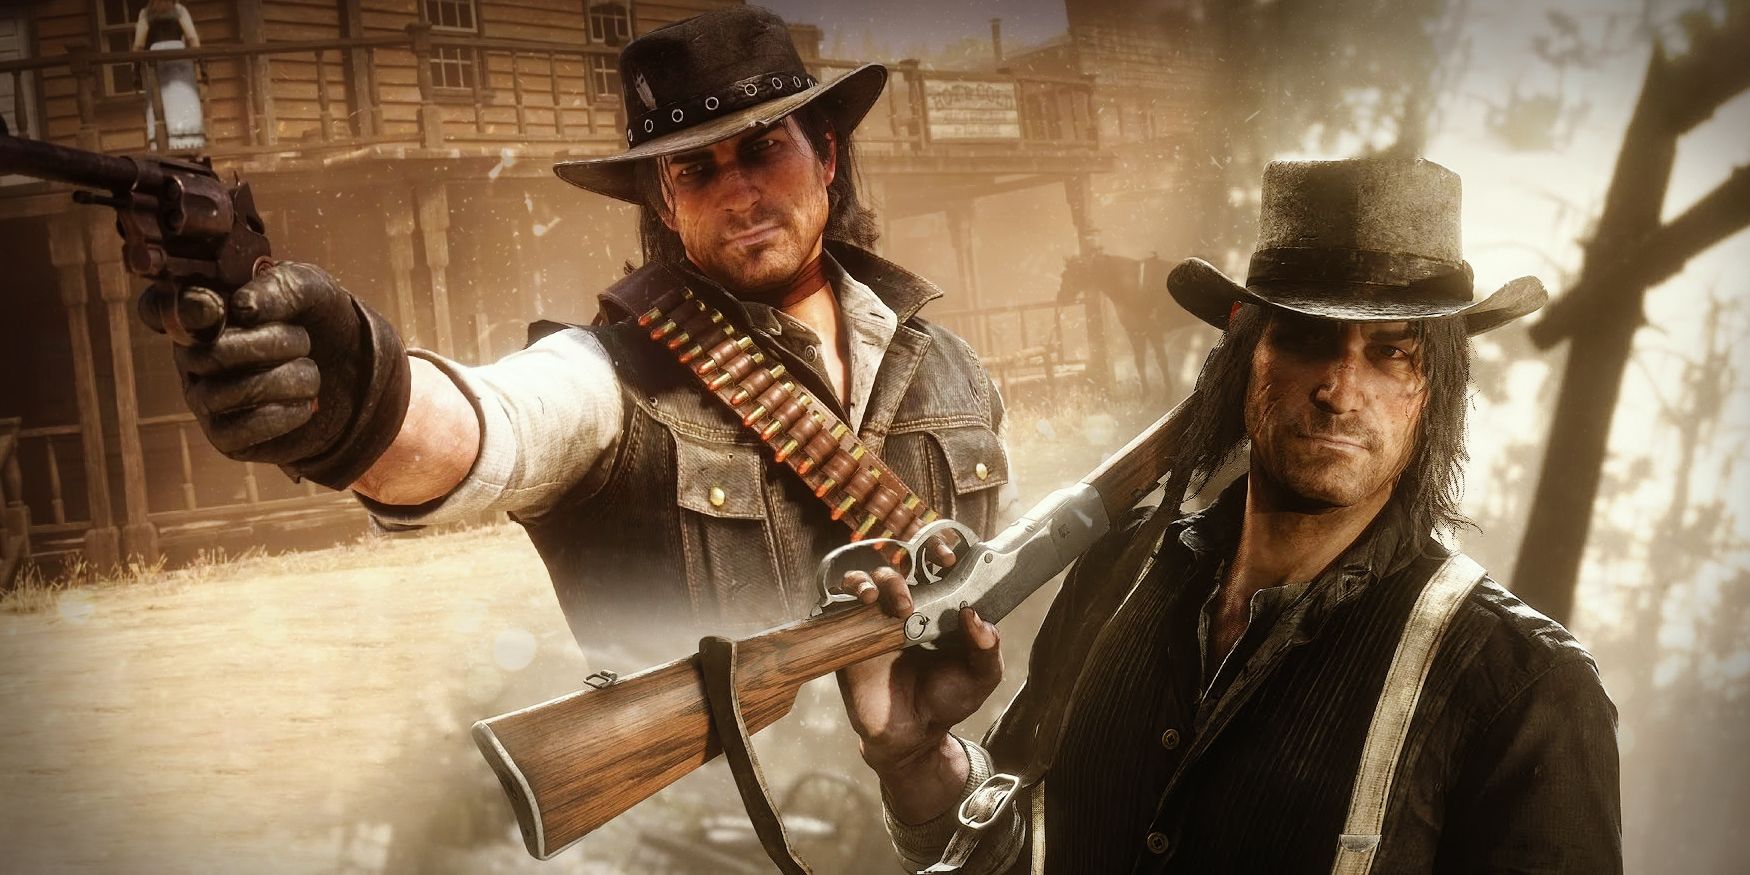 Red Dead Redemption Fans Aren't Happy About Rockstar's Lazy Port